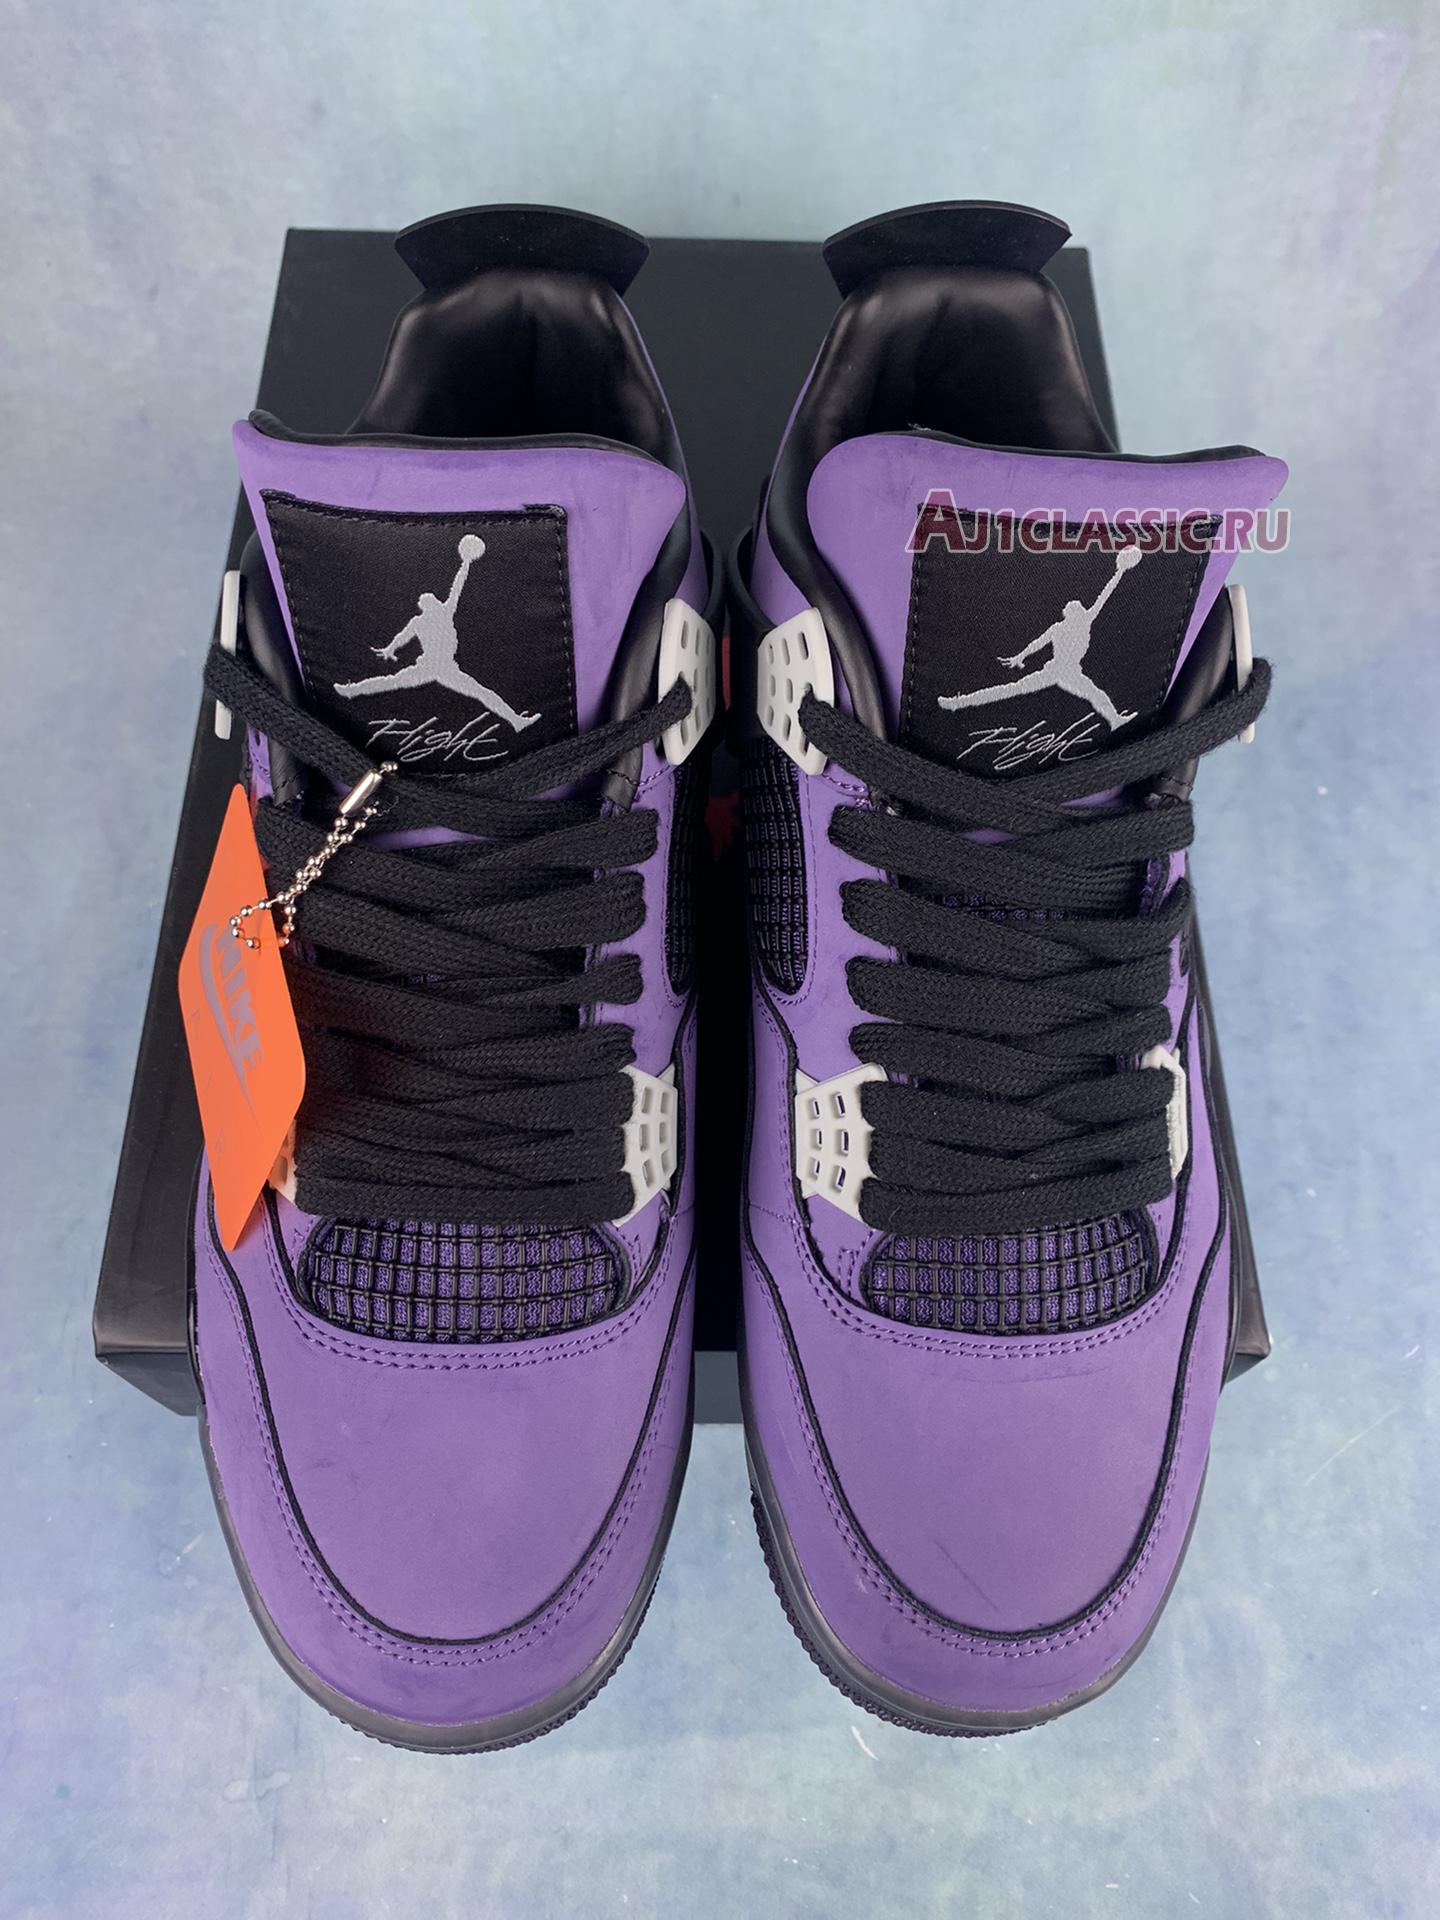 Travis Scott x Air Jordan 4 Retro "Purple Suede - Black Midsole" AJ4-766296